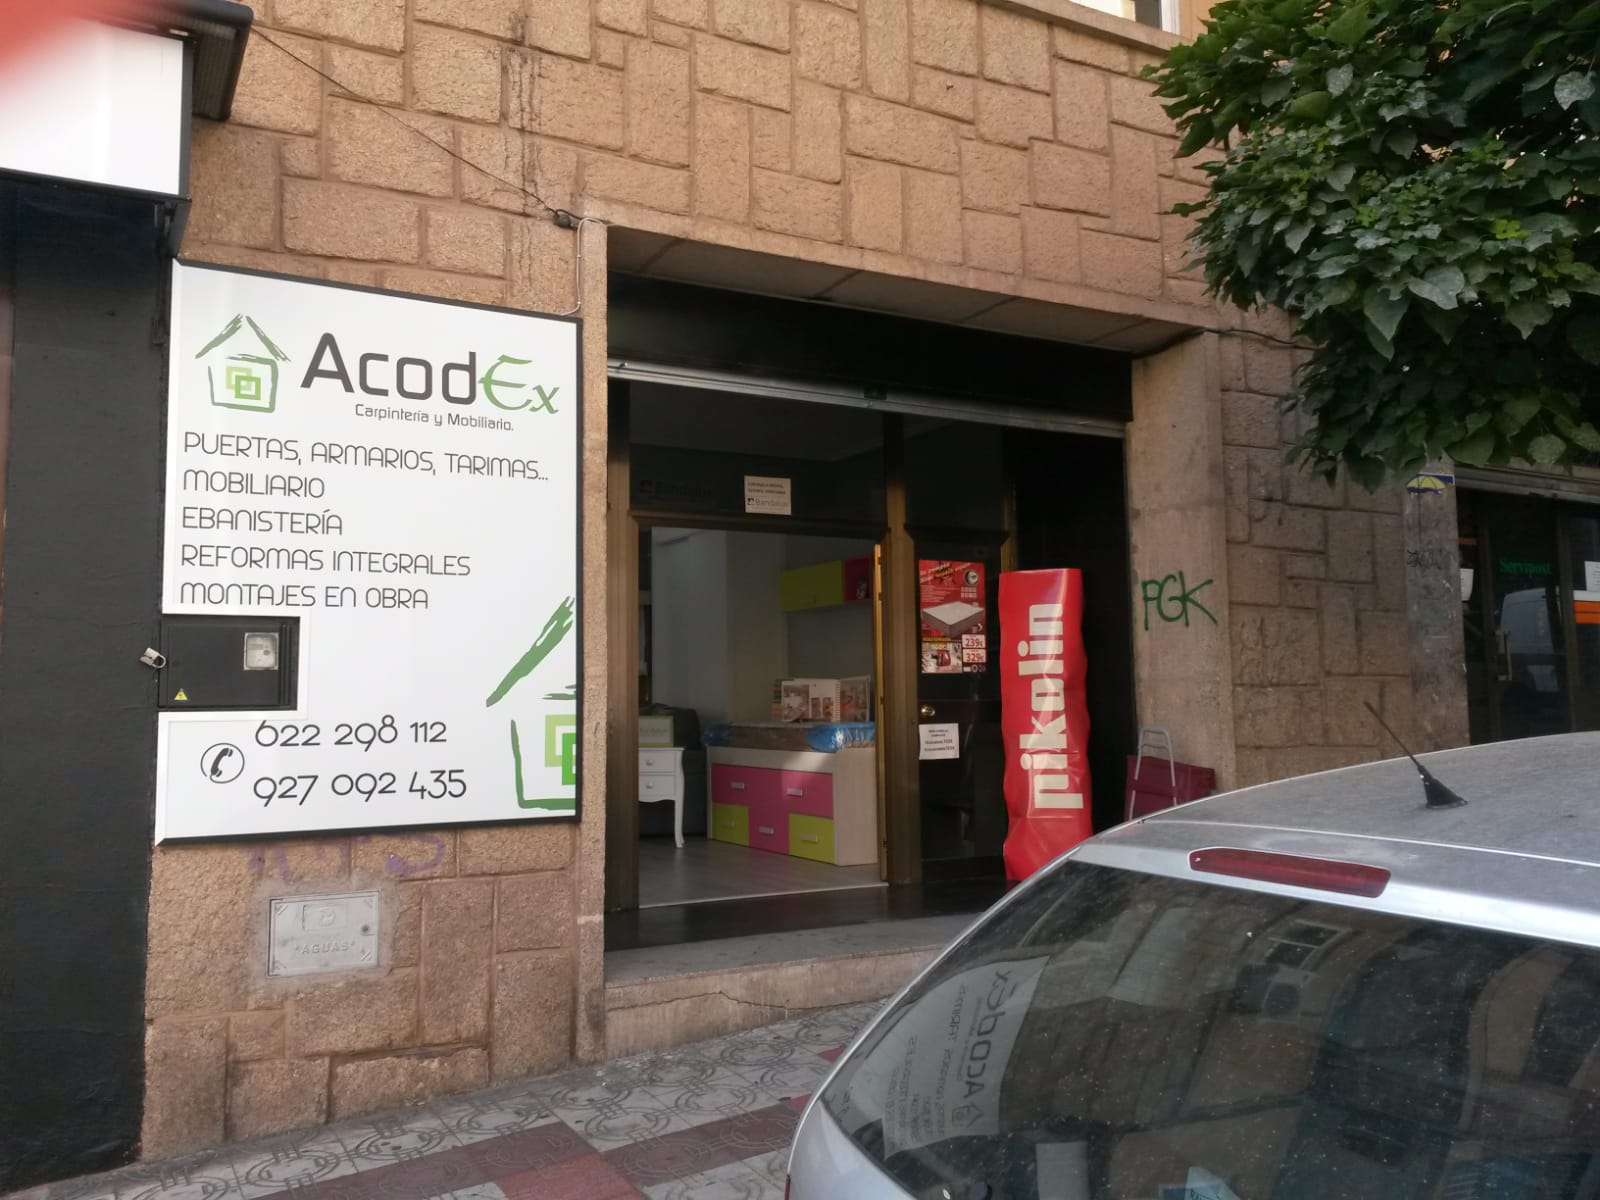 España Tienda de Hogar en Cáceres Acodex 